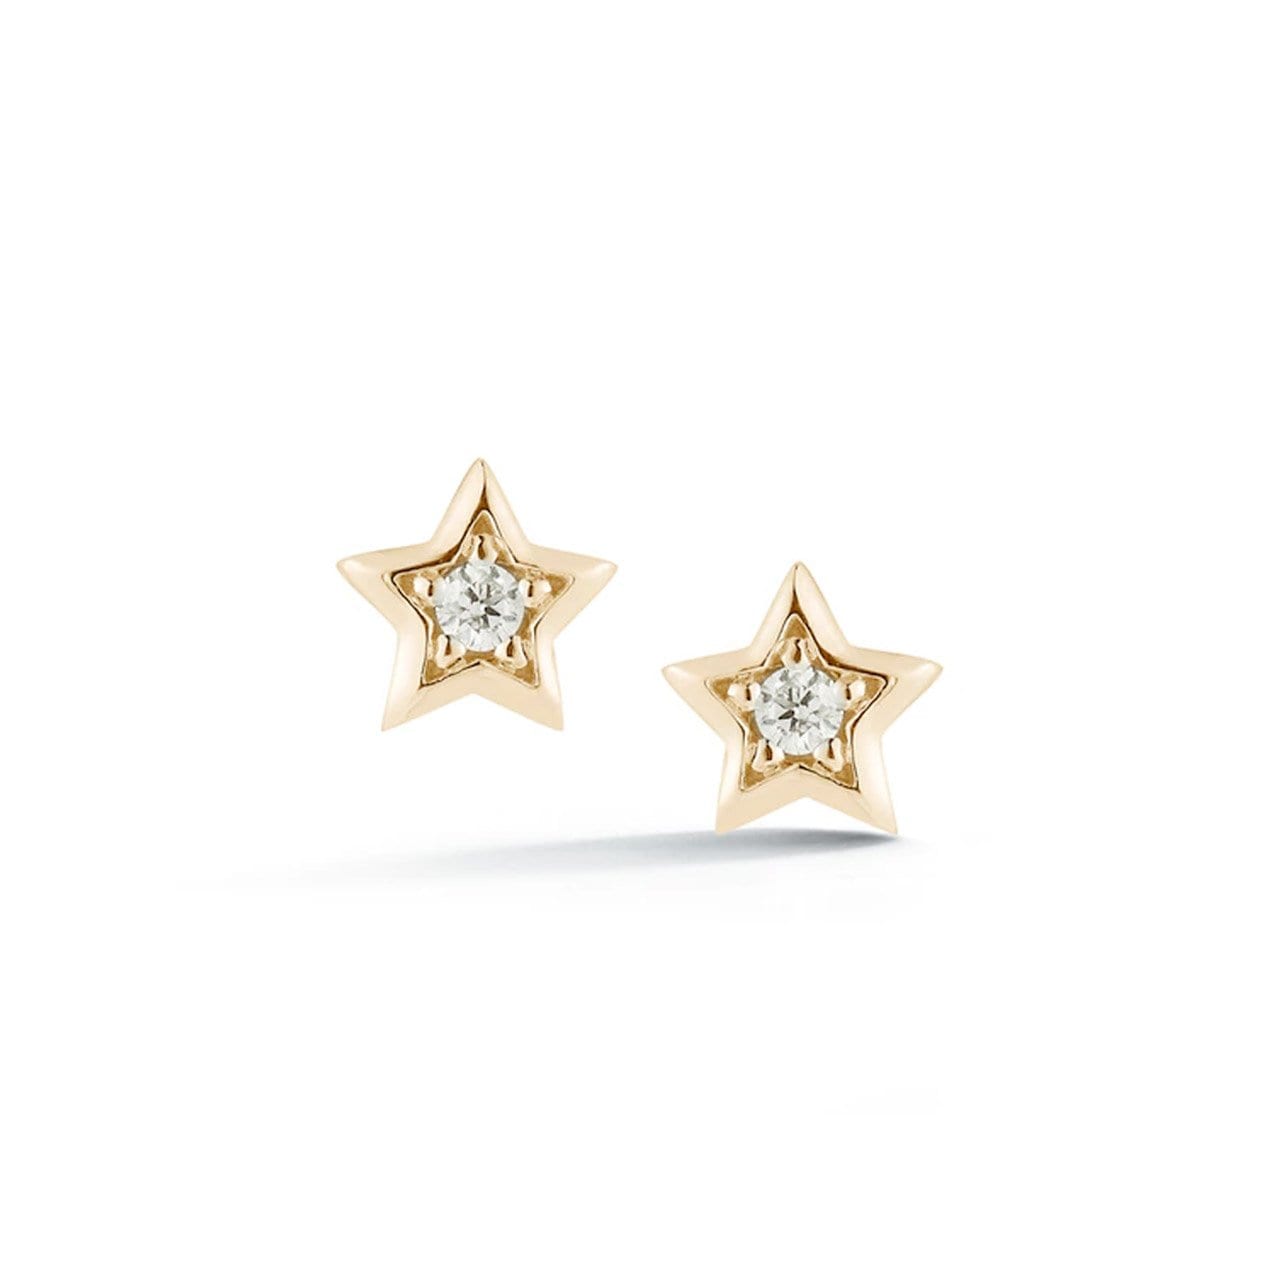 Vincents Fine Jewelry | Dana Rebecca | Julianne Himiko Mini Star Studs